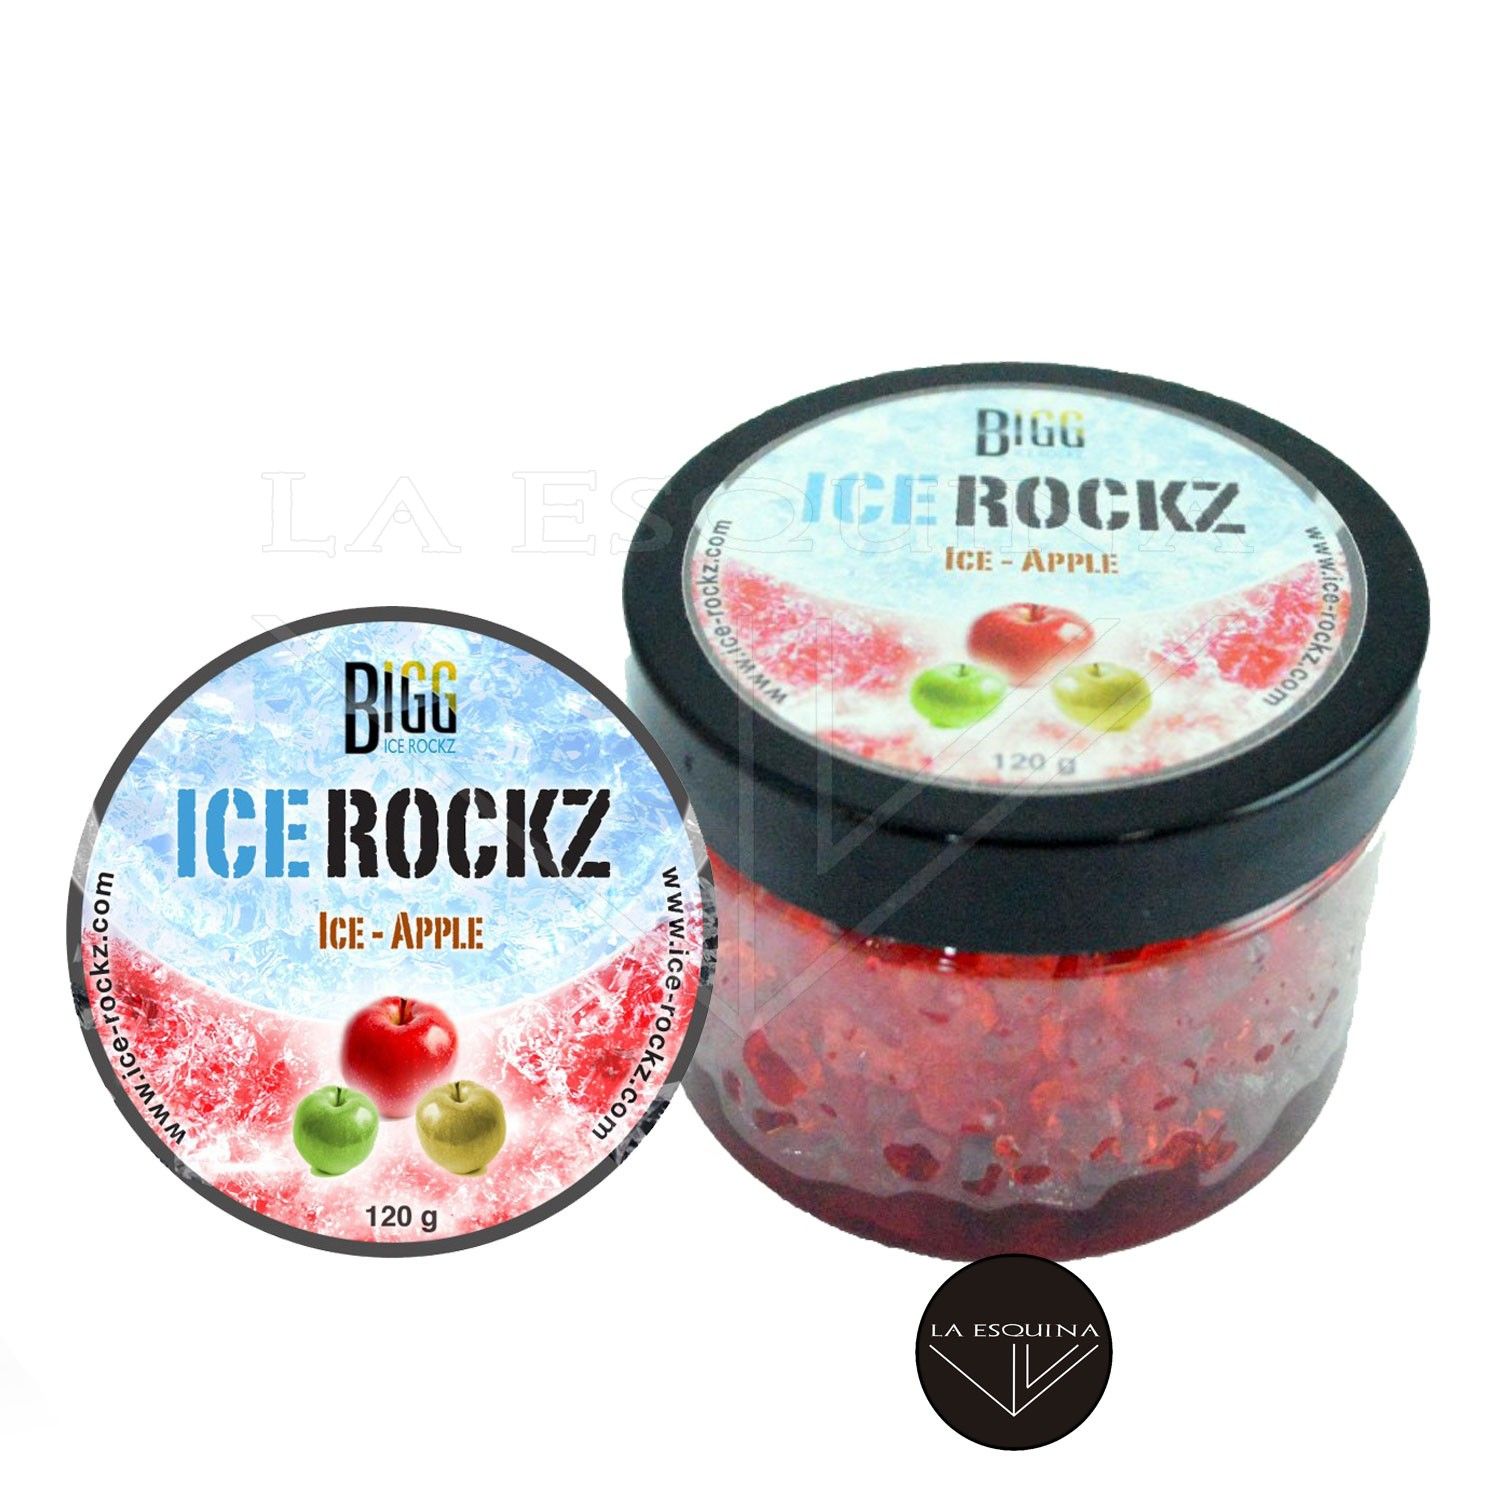 Gel Rock de Cachimba BIGG ICE ROCKZ – 120 g. – Ice-Apple